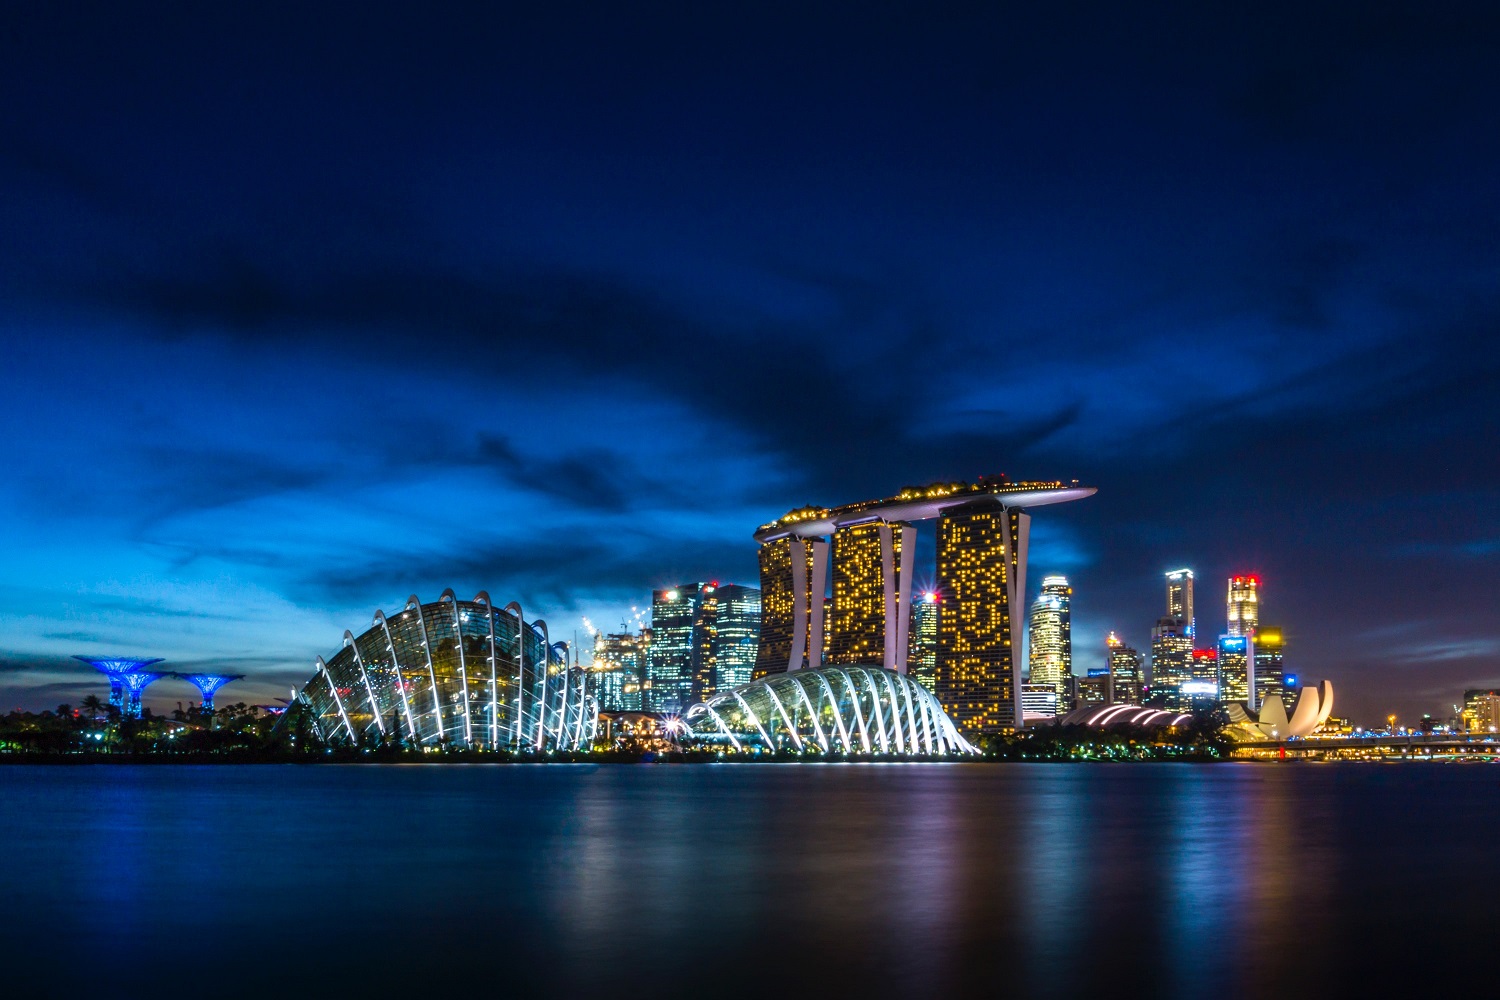 San Marina Bay in Singapore